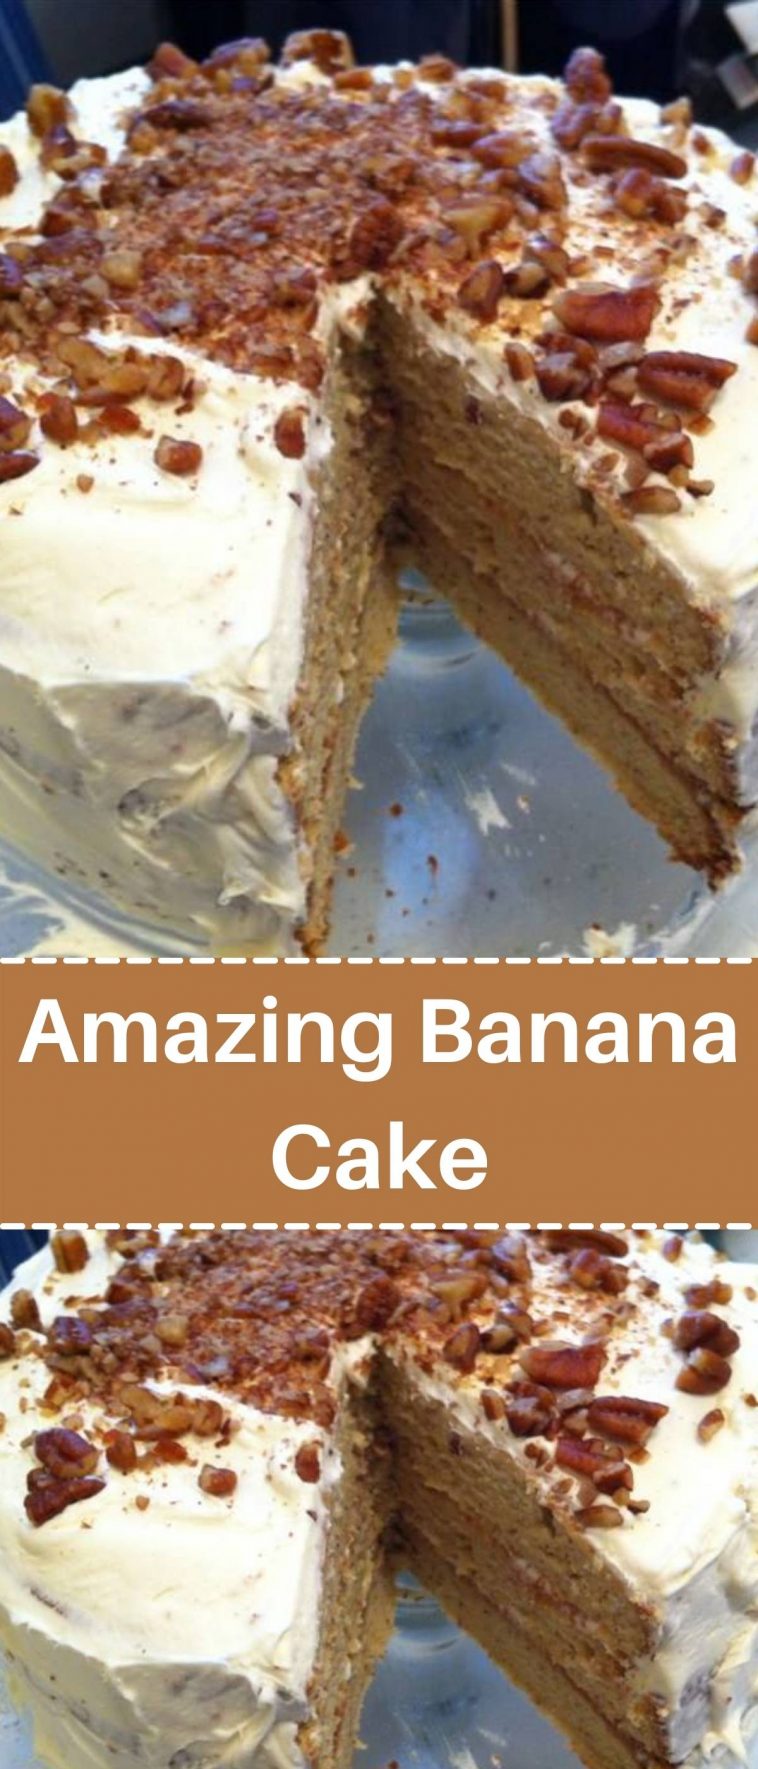 Amazing Banana Cake